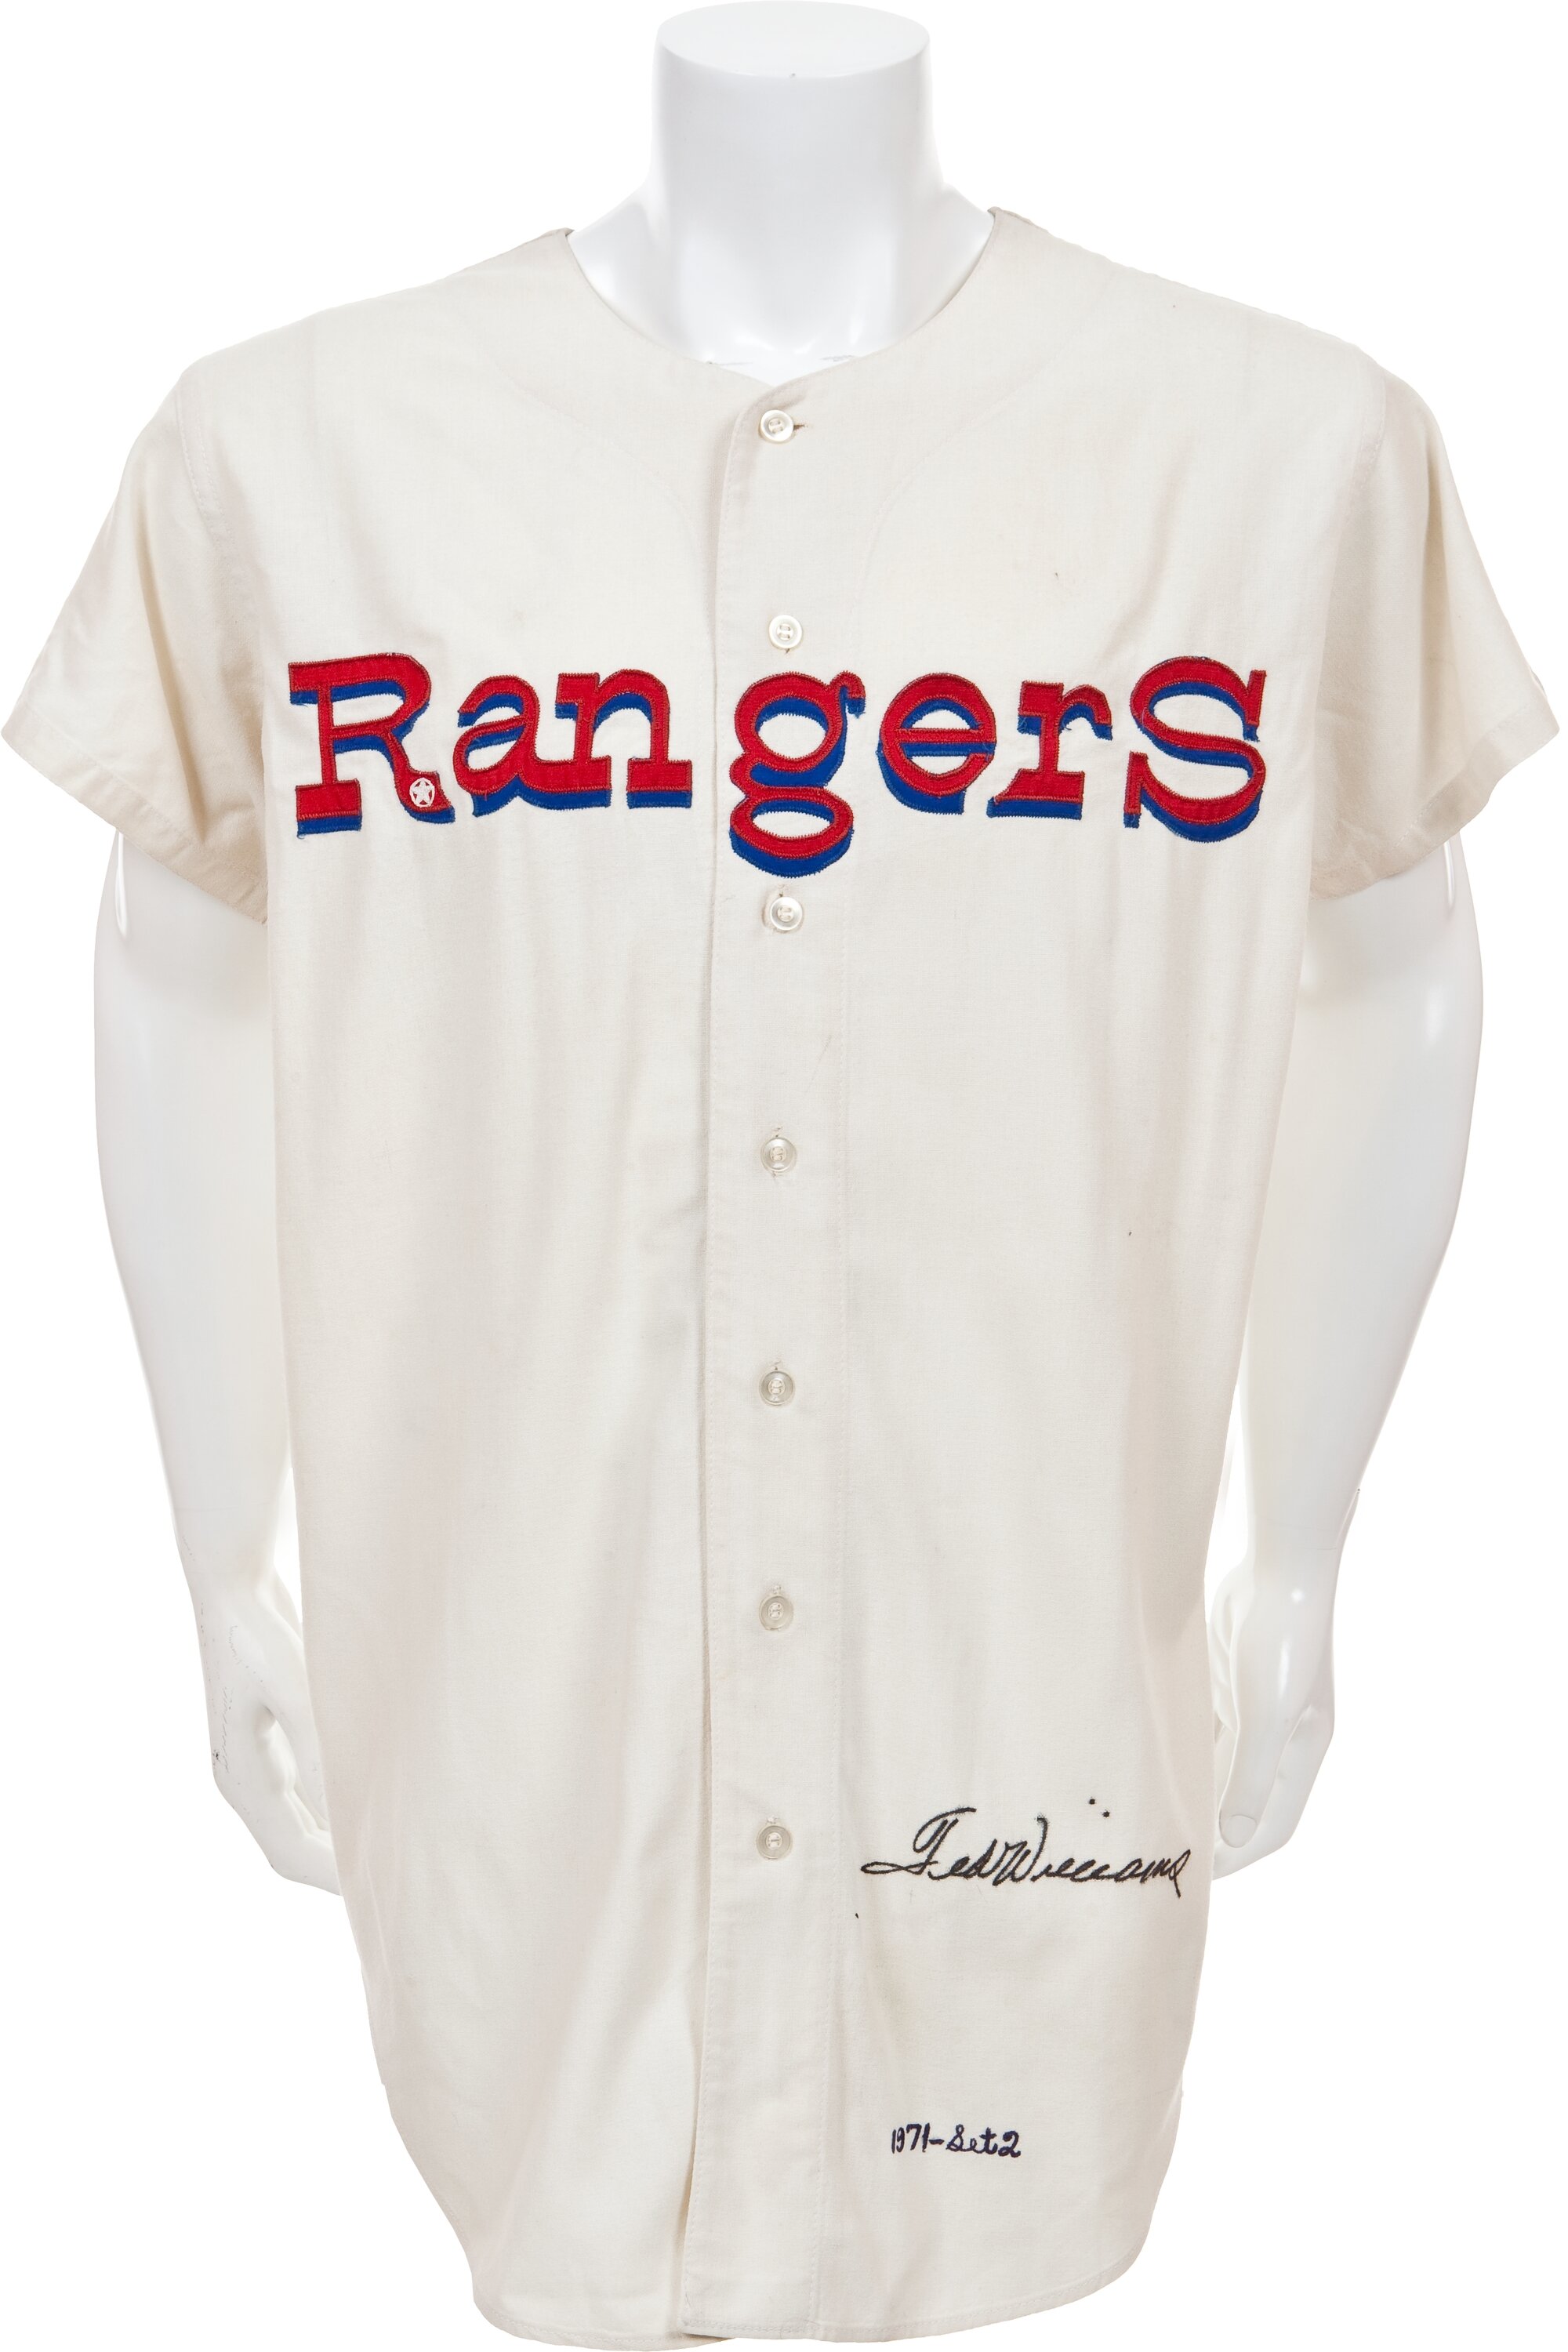 texas rangers 1970s jersey